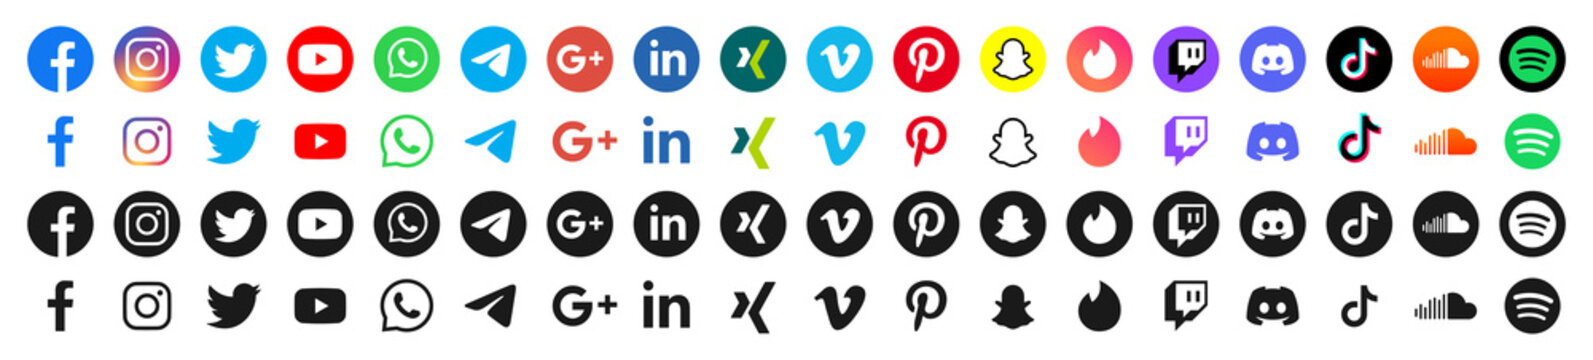 Social media vector icon set